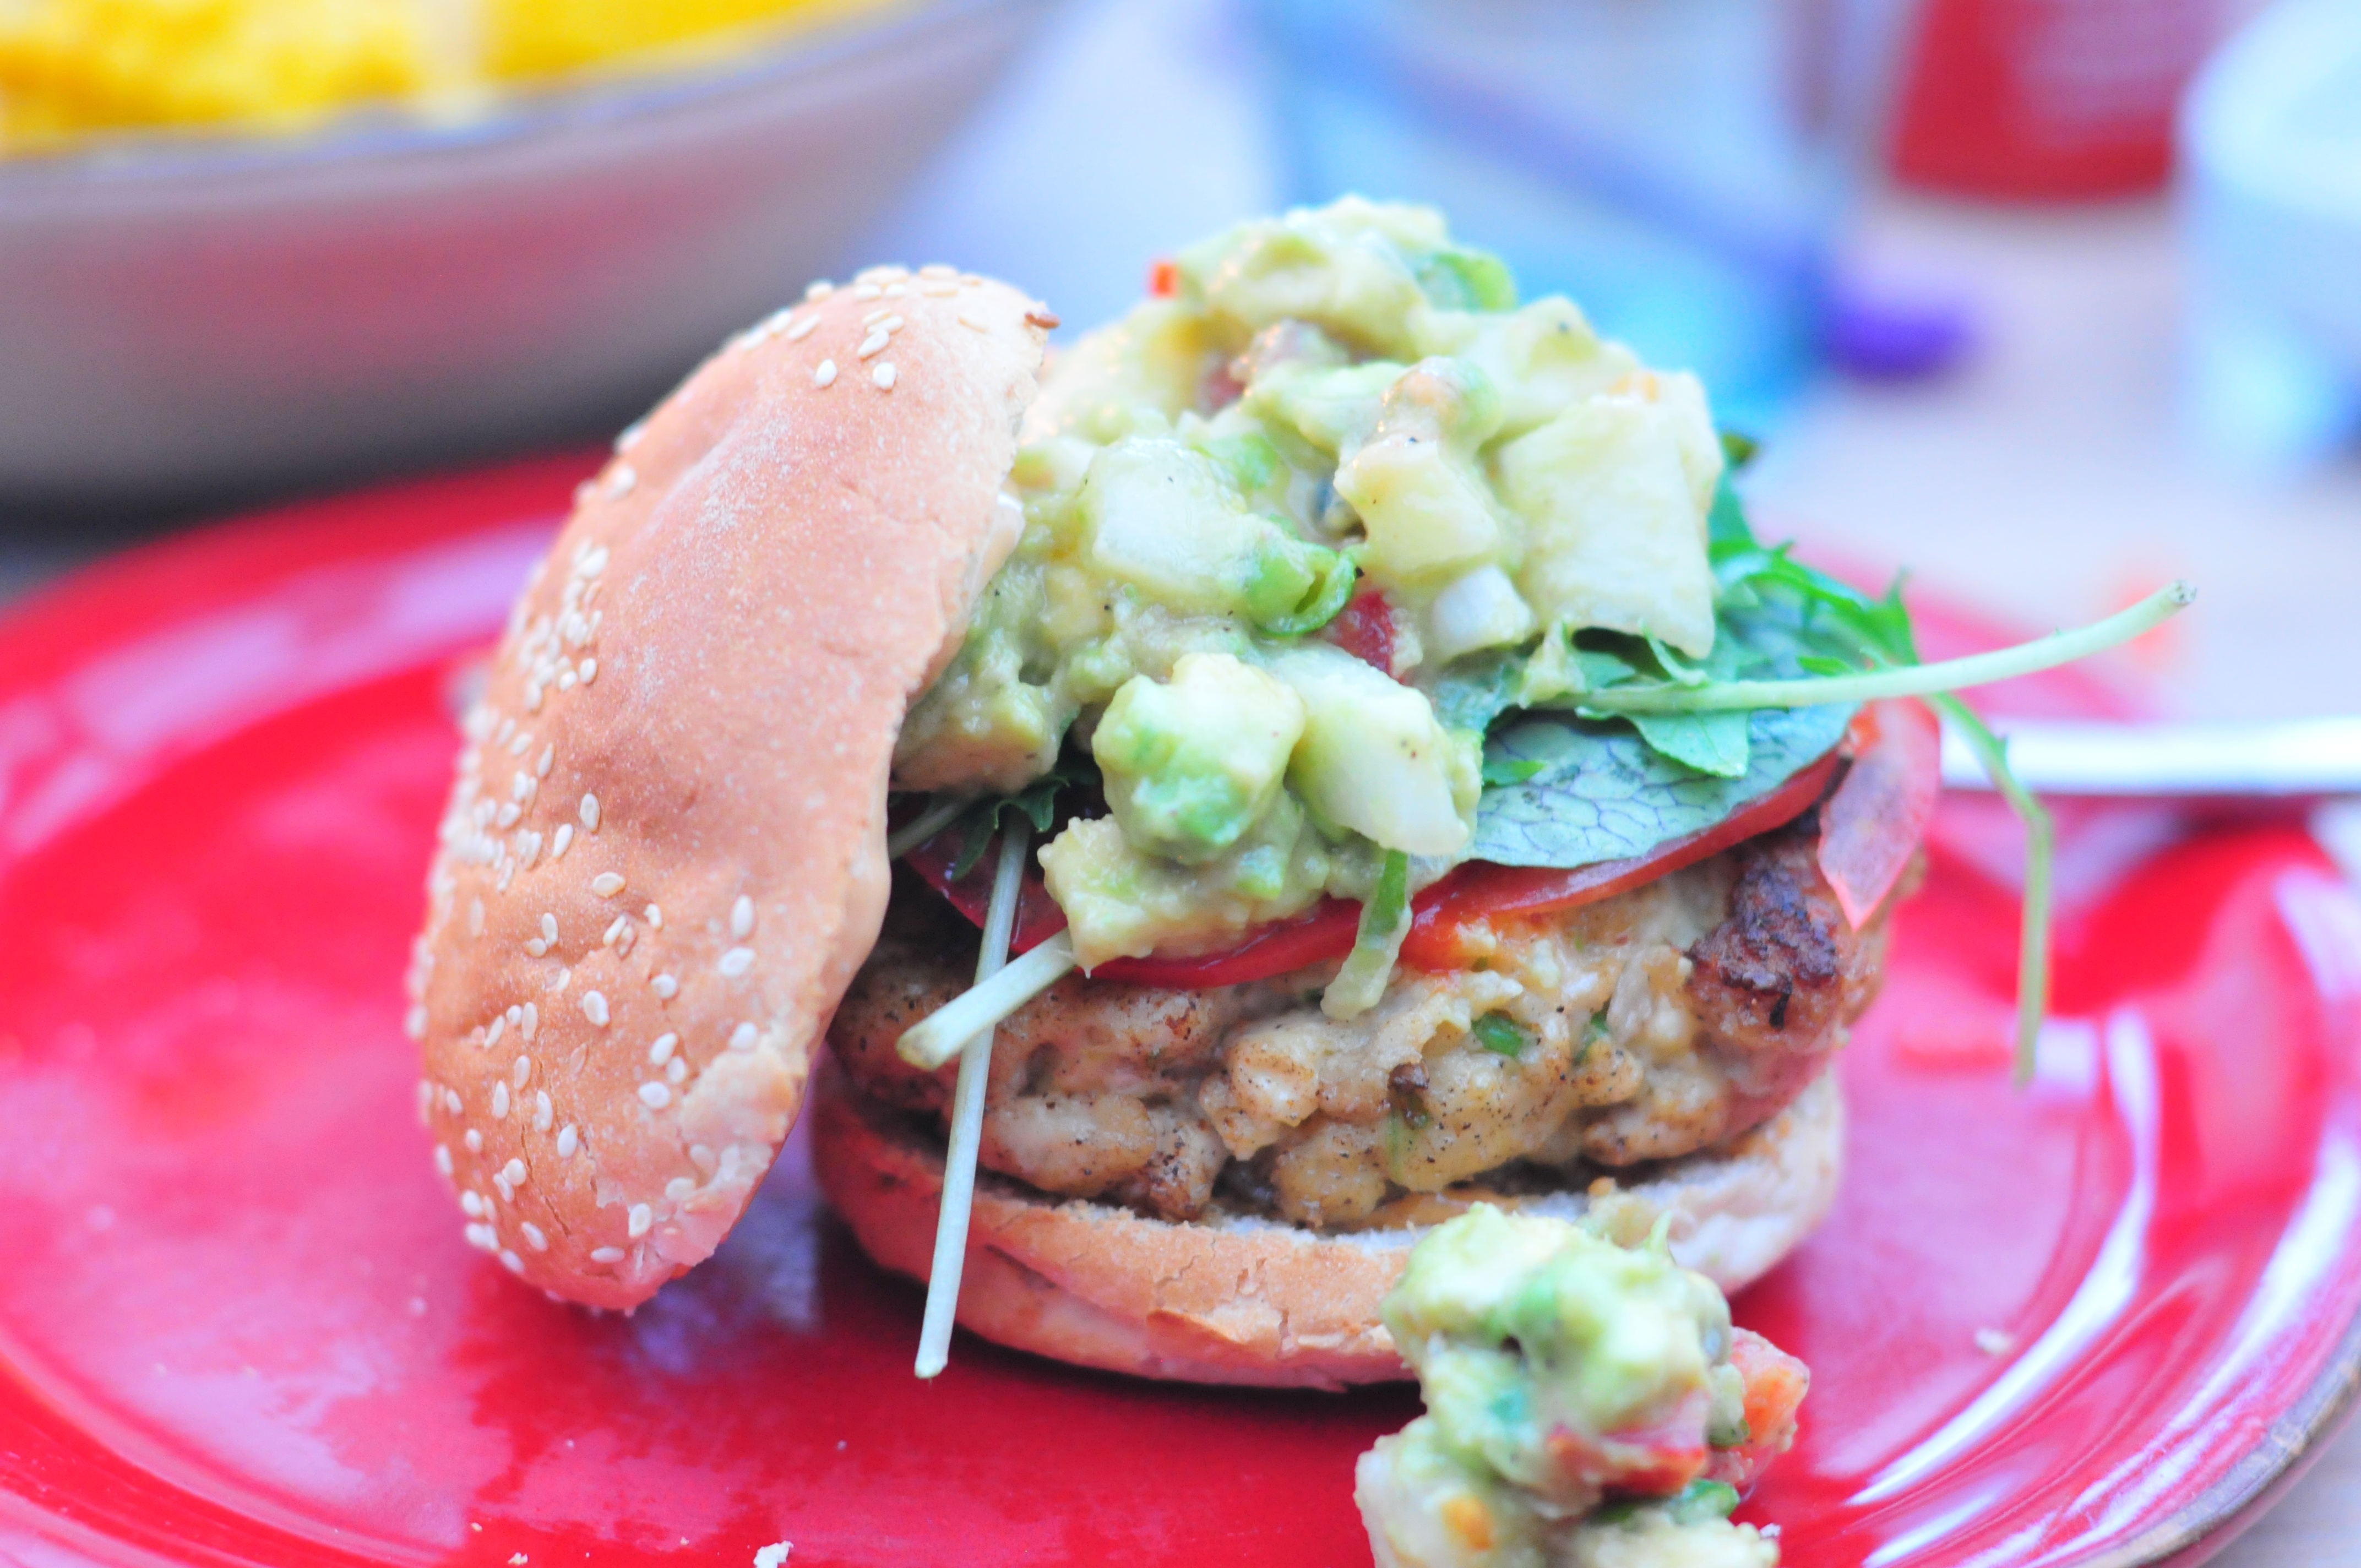 shark burger with potato salad and greens